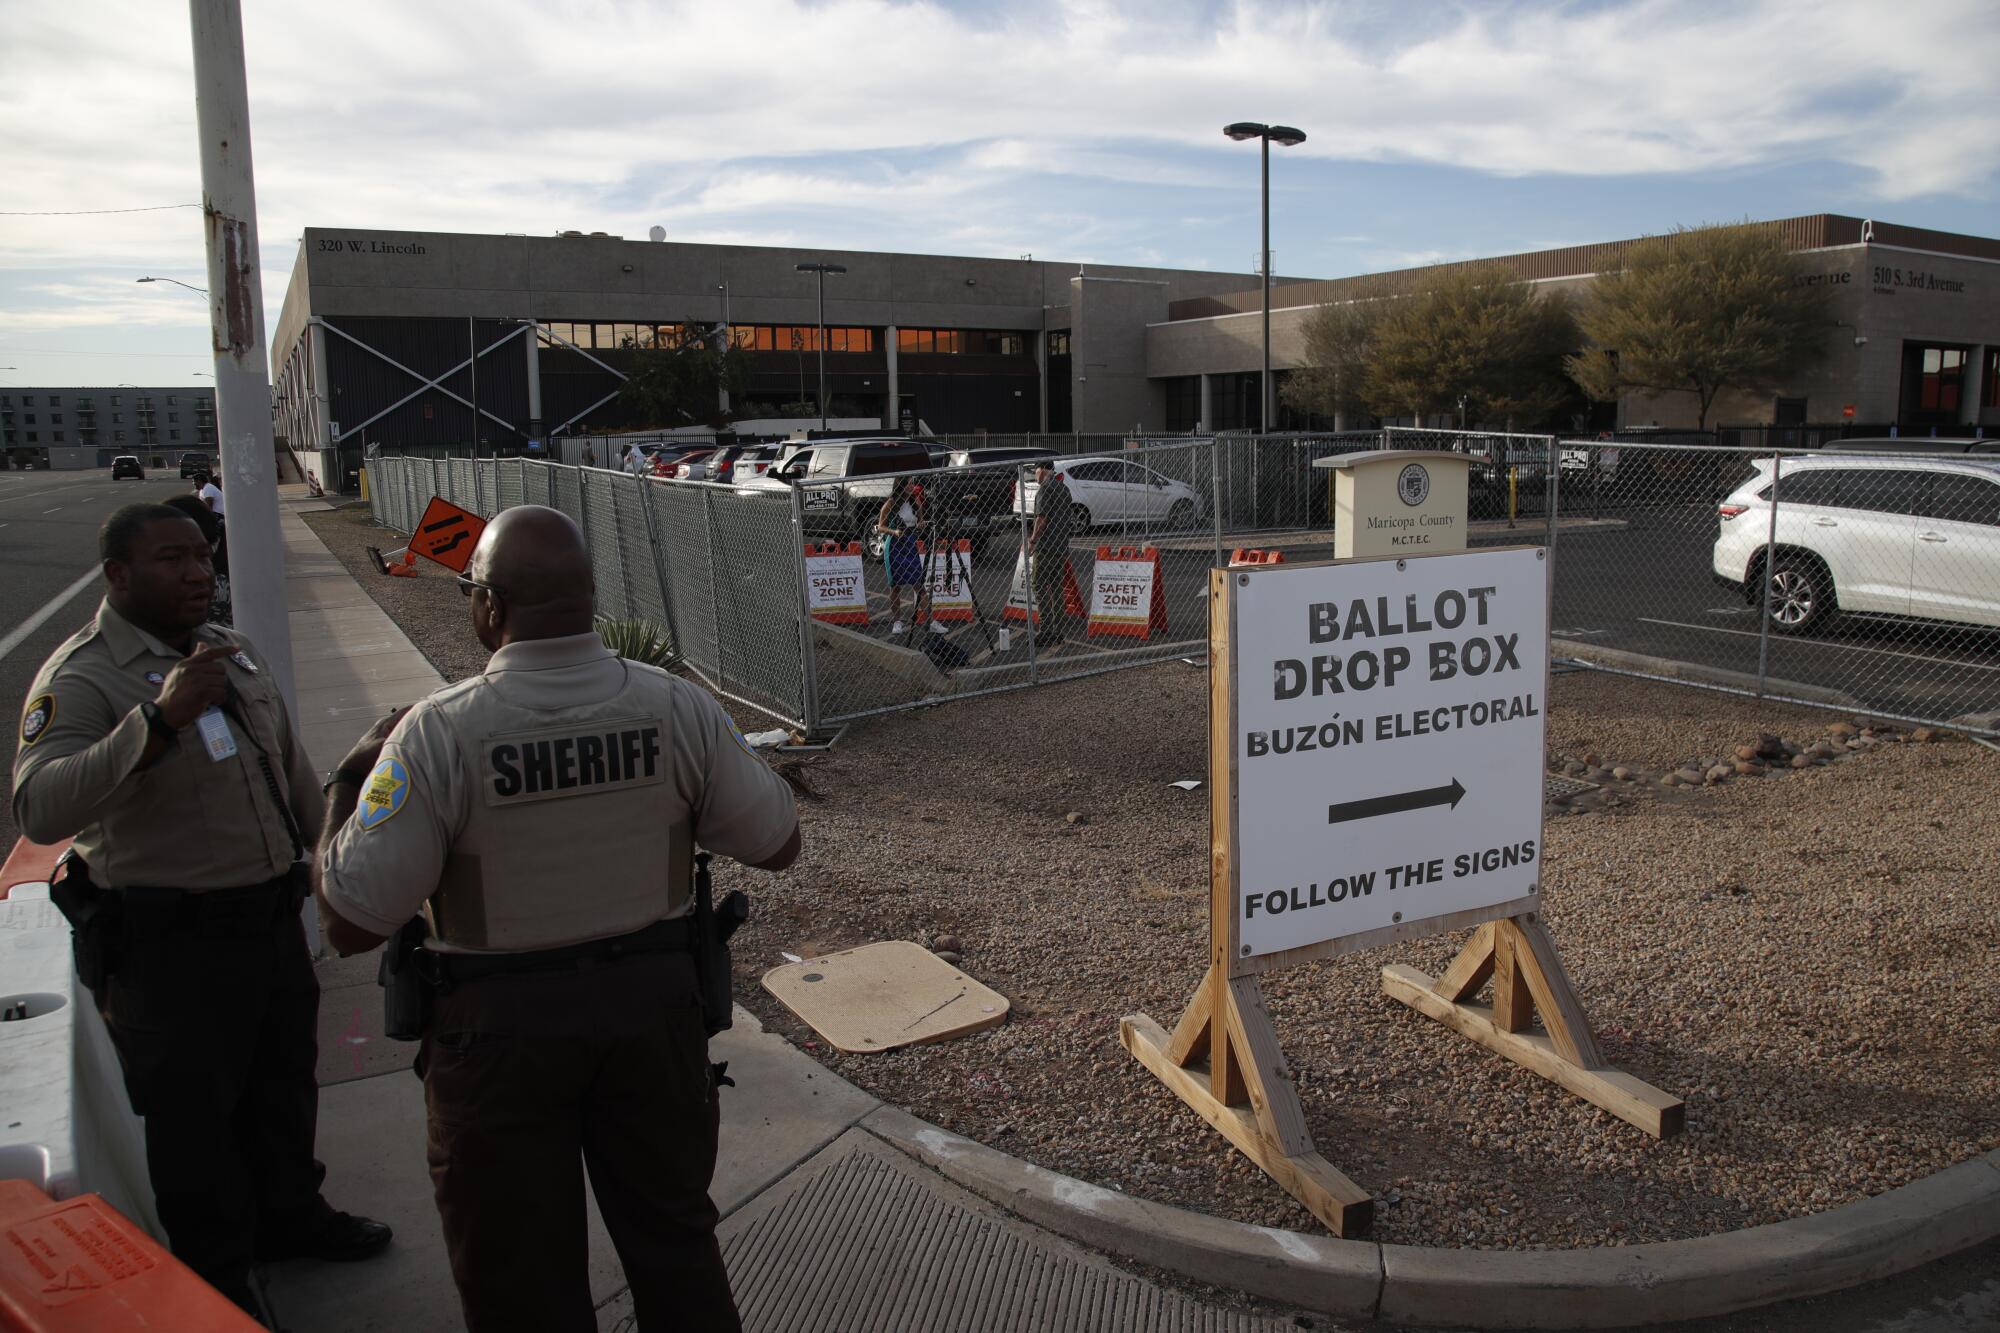 Security guards watch over a ballot drop box 